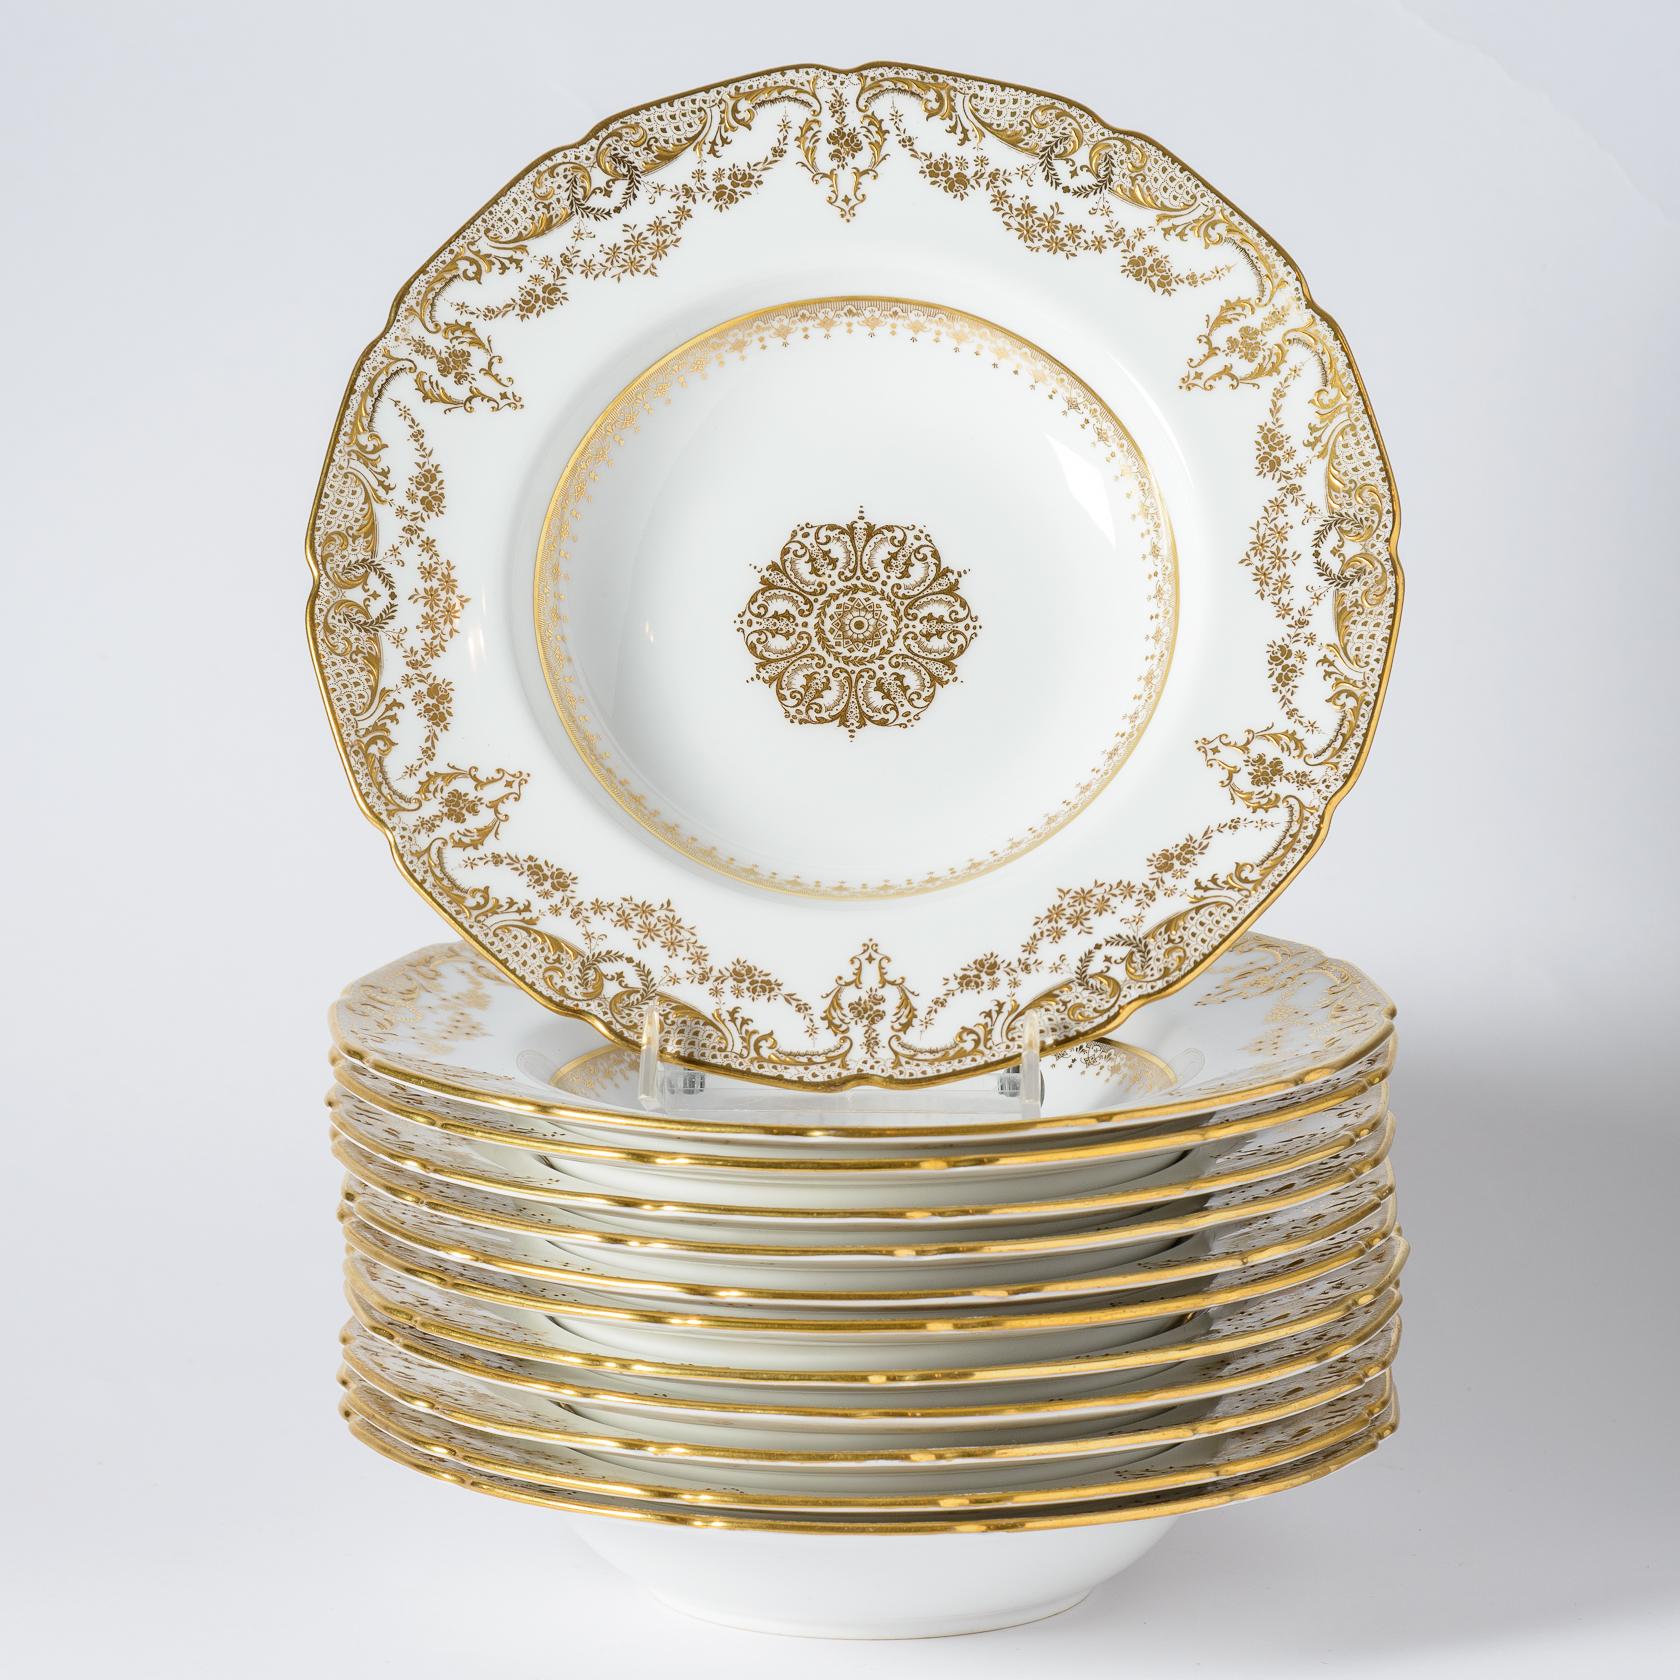 Early 20th Century Set of 12 Fine Antique Tiffany Rim Soup or Entree Bowls, English, circa 1910